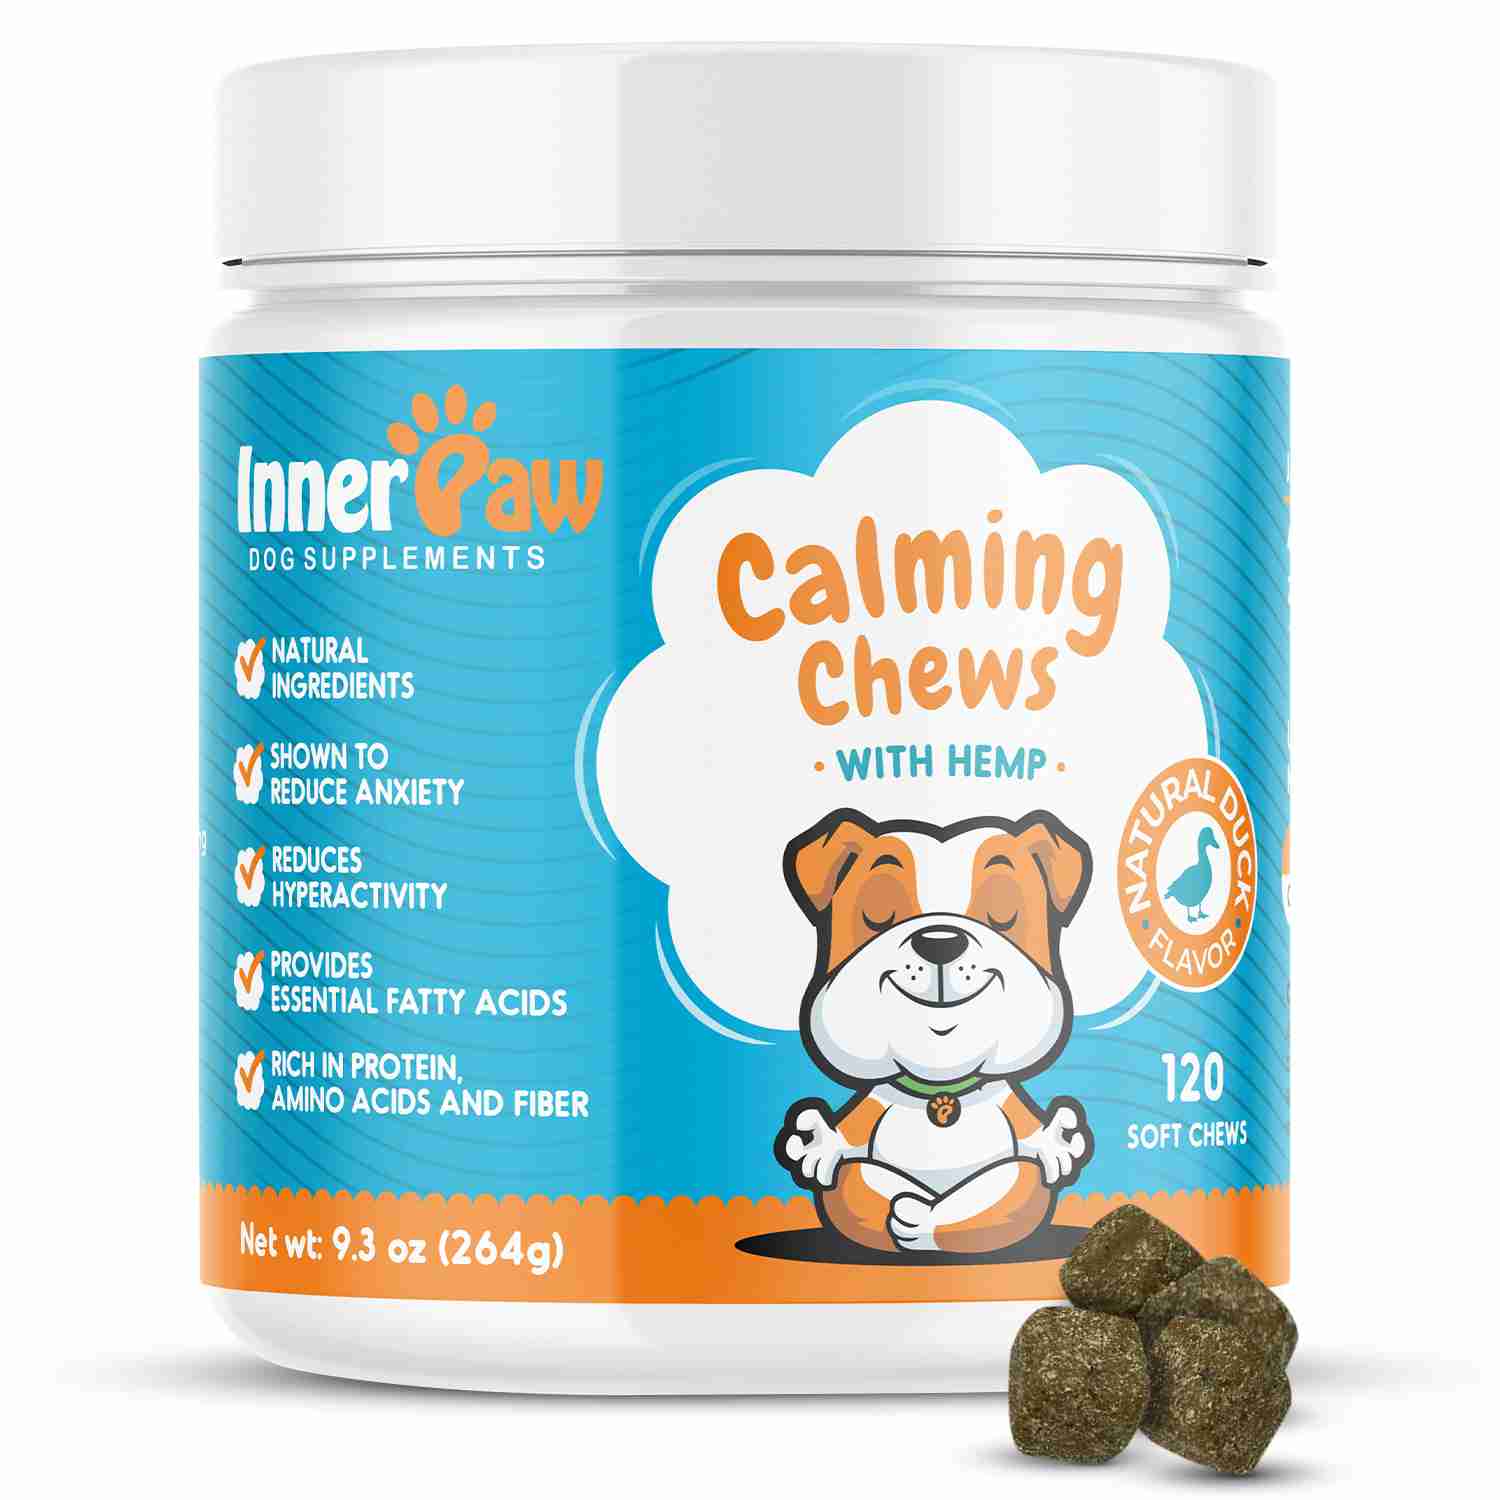 dog-supplements with cash back rebate